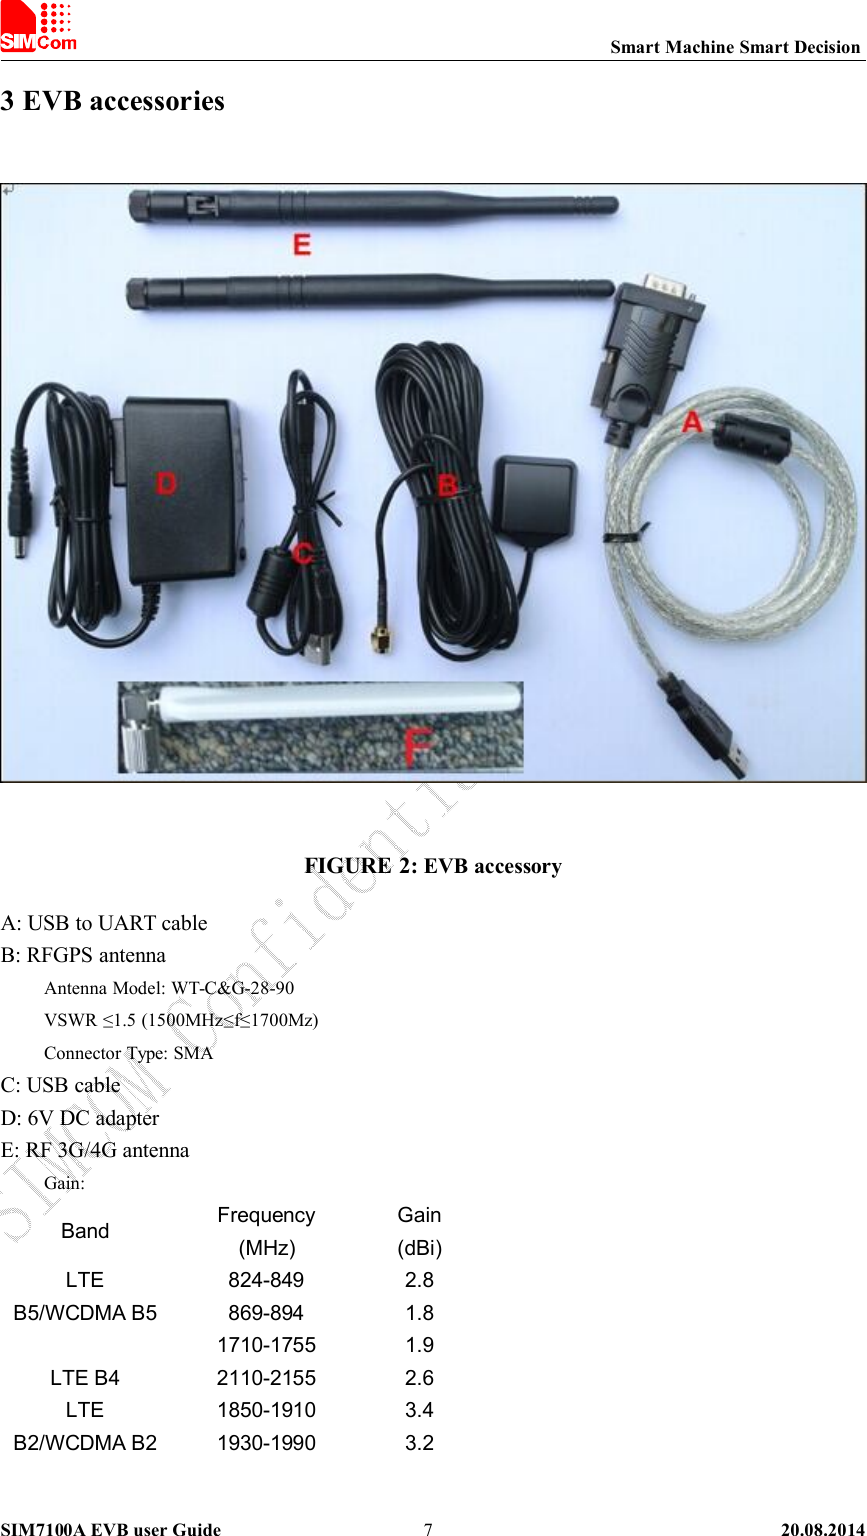 Smart Machine Smart DecisionSIM7100A EVB user Guide 20.08.201473 EVB accessoriesFIGURE 2: EVB accessoryA: USB to UART cableB: RFGPS antennaAntenna Model: WT-C&amp;G-28-90VSWR ≤1.5 (1500MHz≤f≤1700Mz)Connector Type: SMAC: USB cableD: 6V DC adapterE: RF 3G/4G antennaGain:Band Frequency(MHz)Gain(dBi)LTEB5/WCDMA B5824-849 2.8869-894 1.8LTE B41710-1755 1.92110-2155 2.6LTEB2/WCDMA B21850-1910 3.41930-1990 3.2